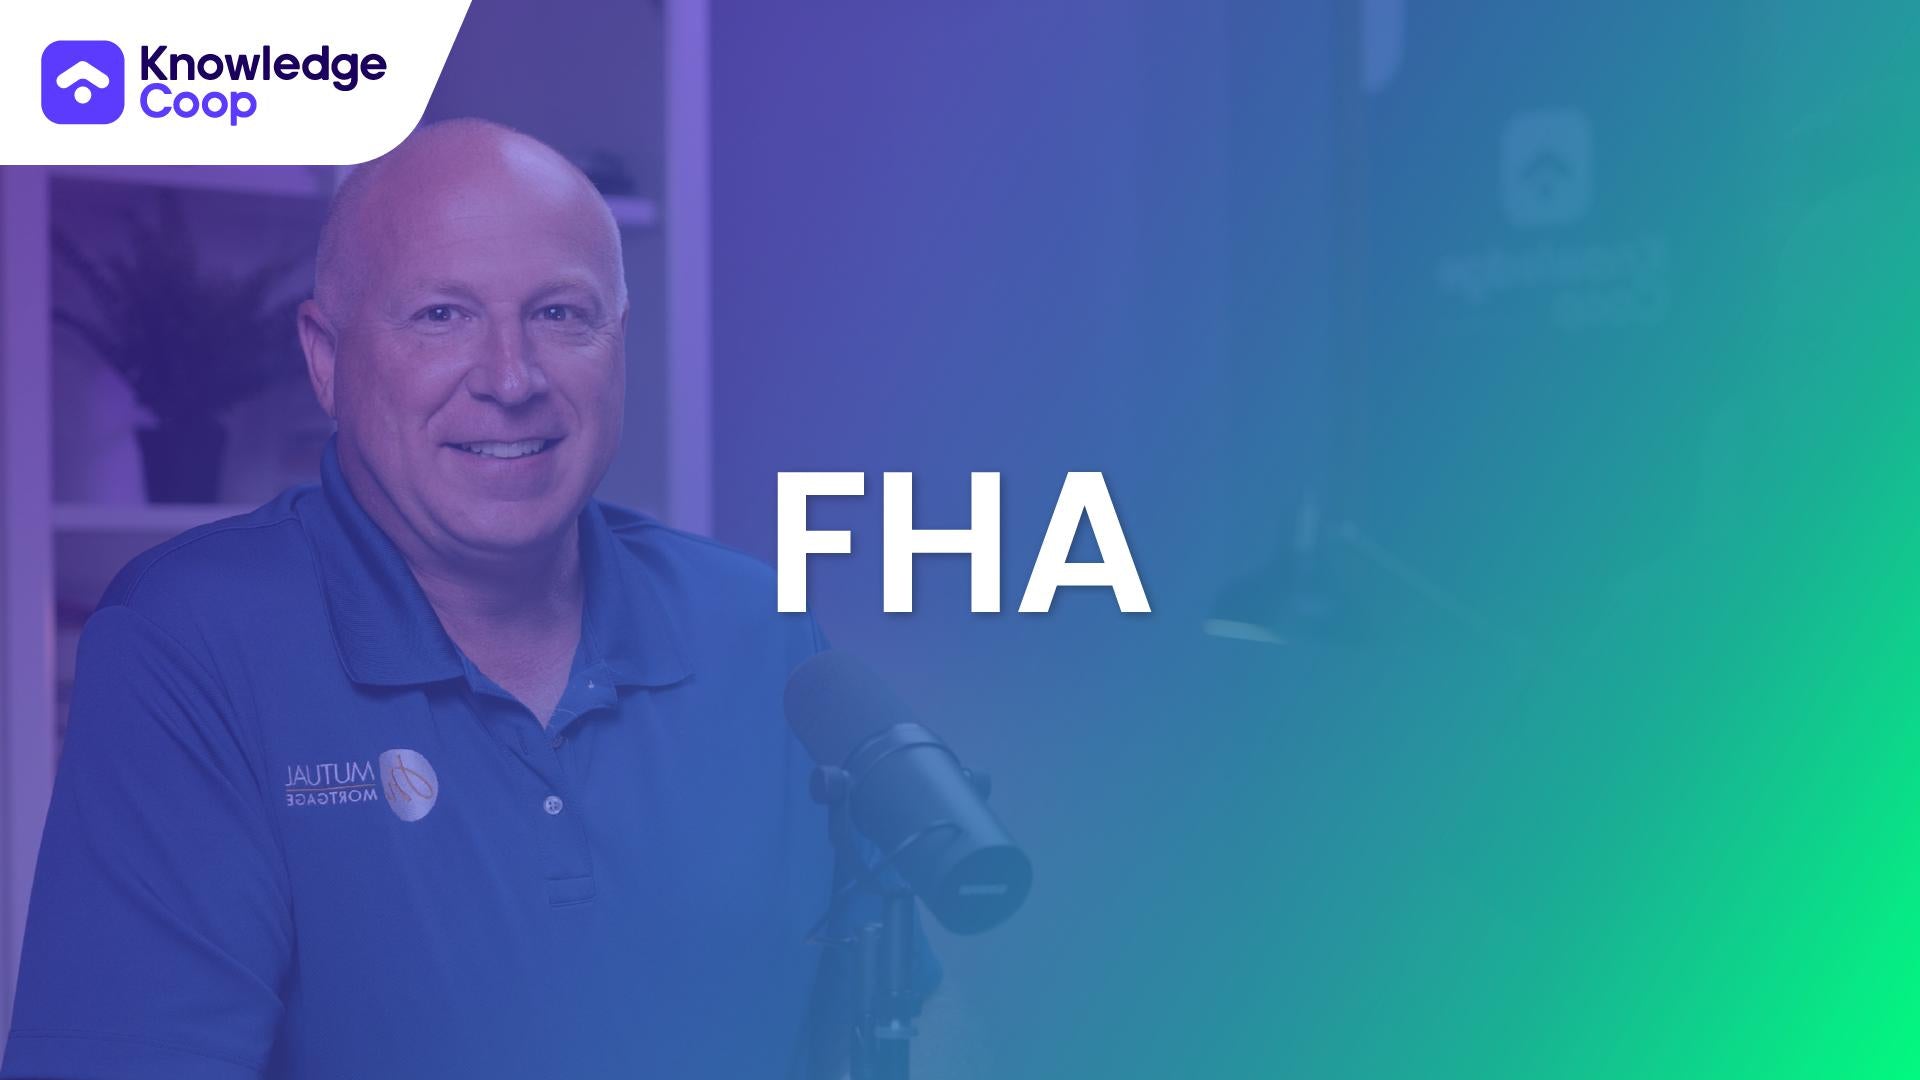 FHA - (Federal Housing Administration)